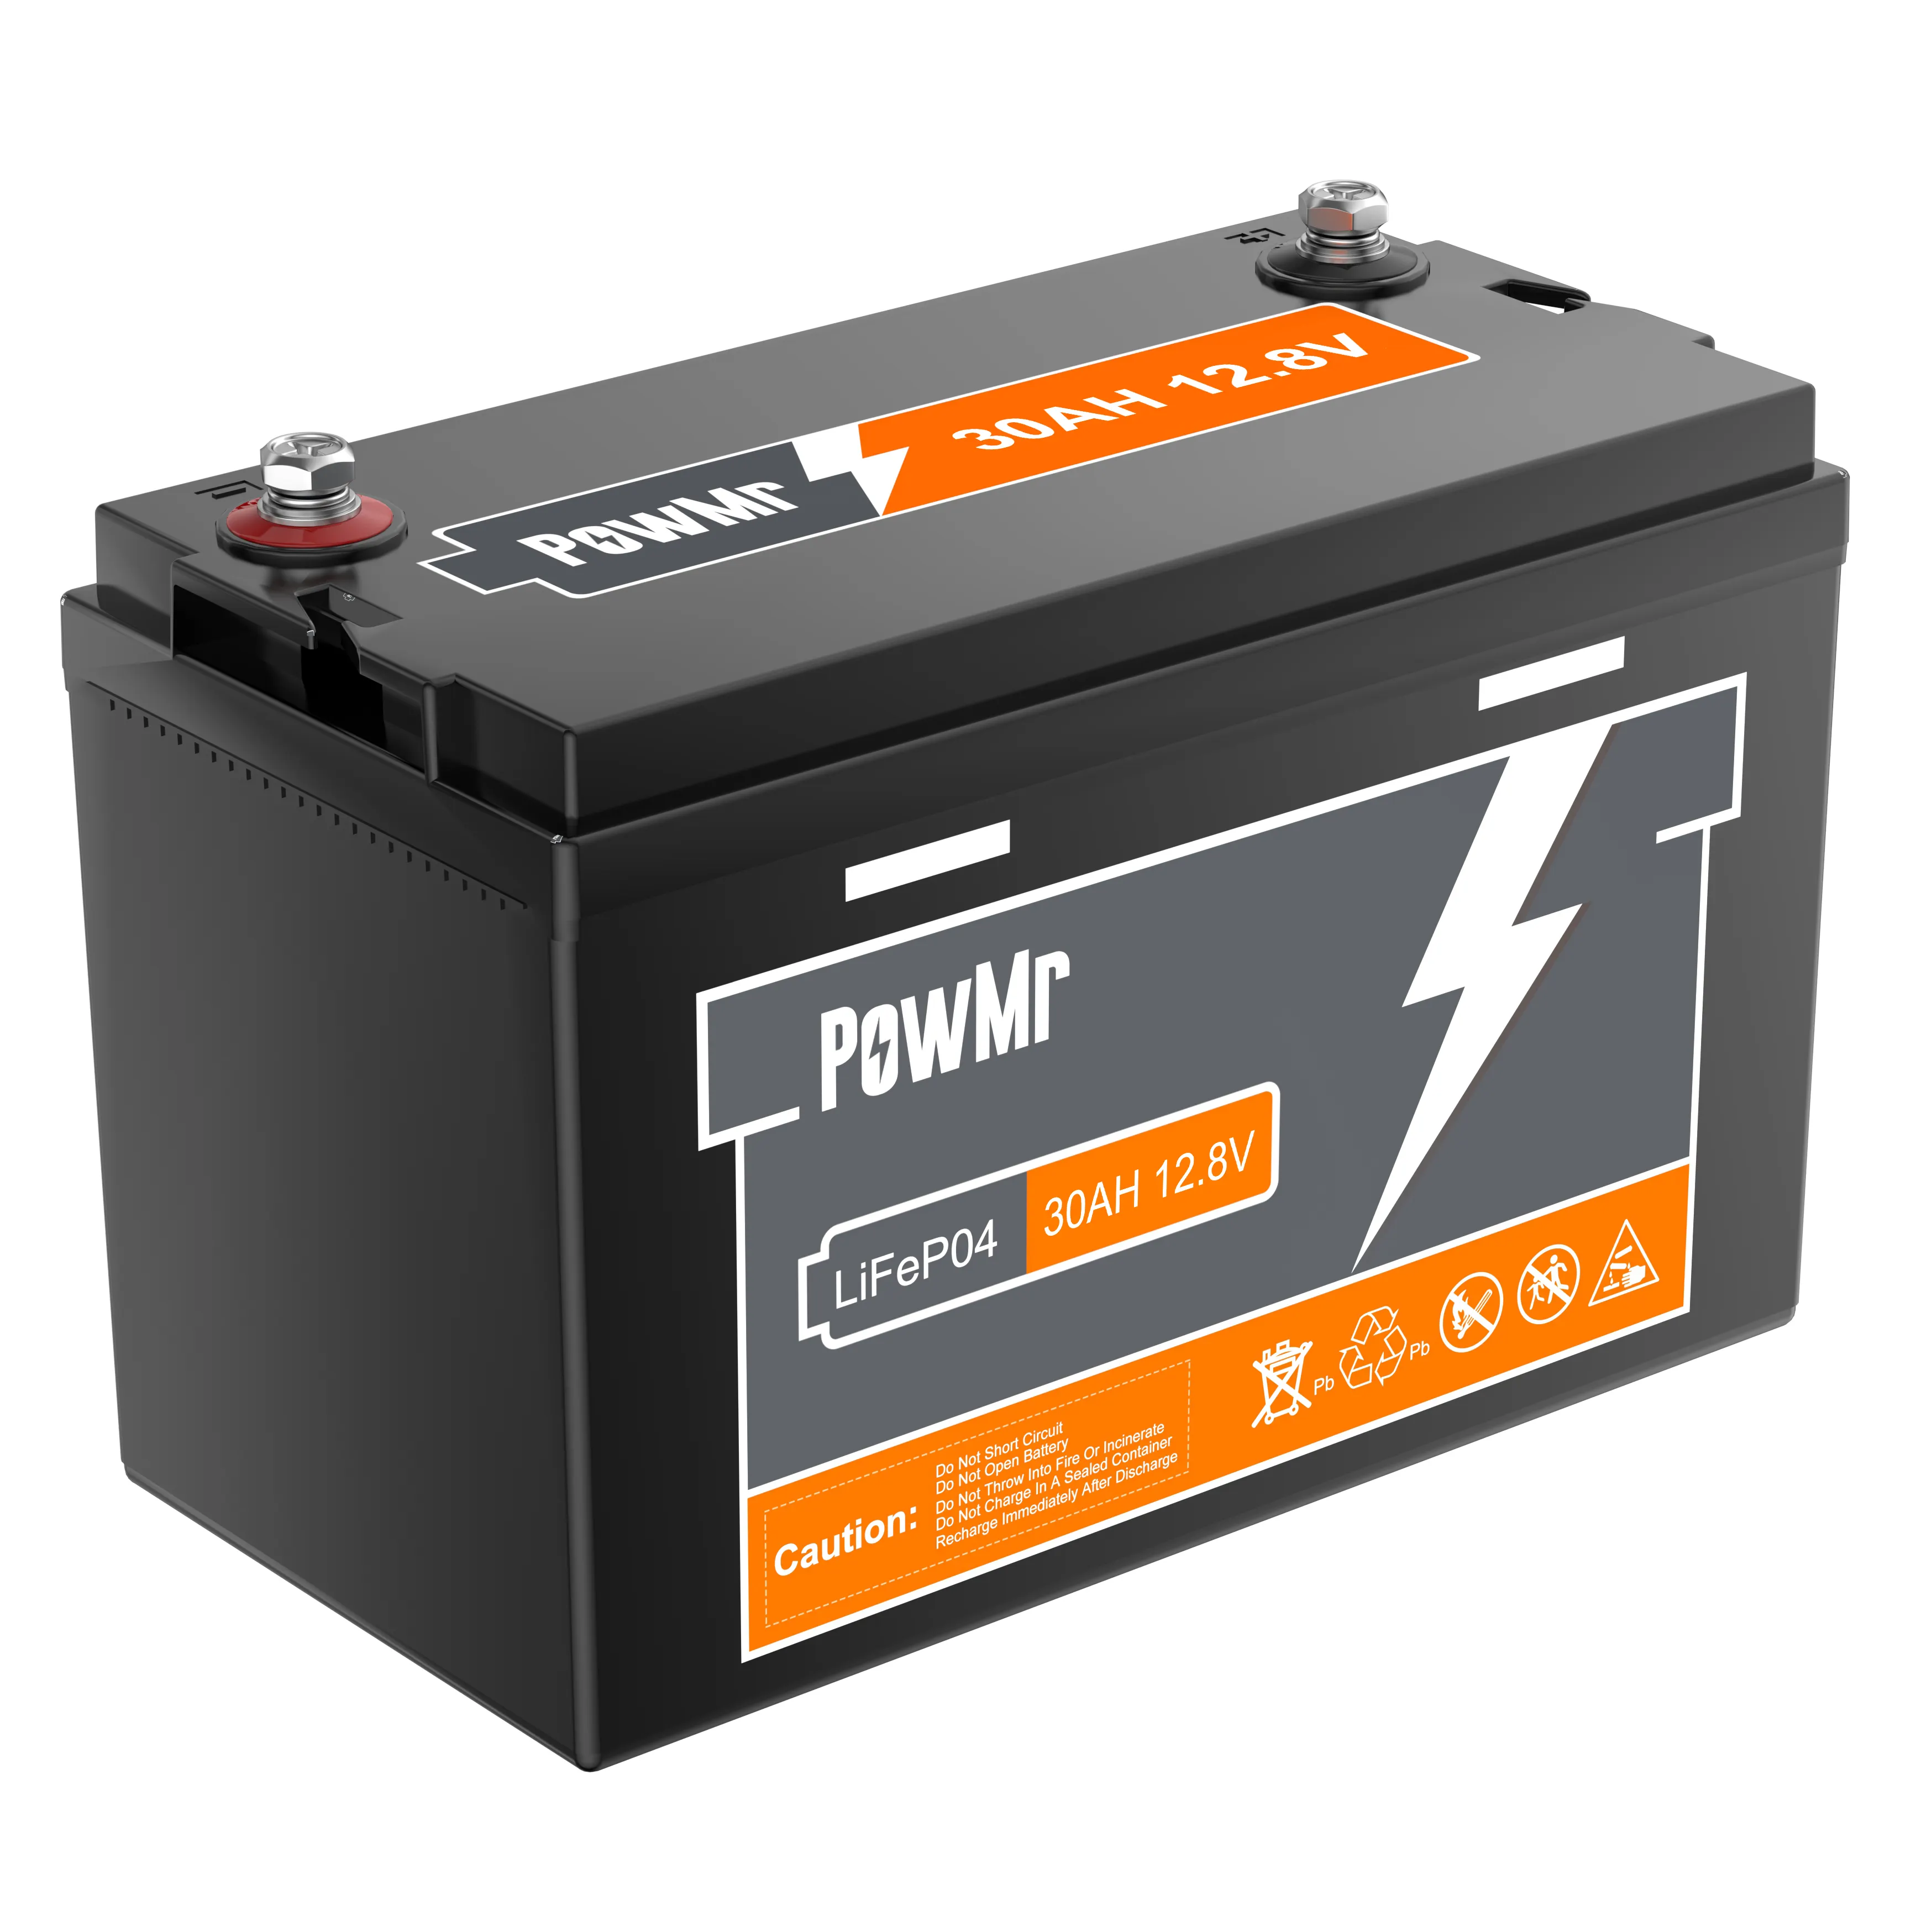 PowMr-Batería de Gel Solar, pila profesional de litio de plomo-ácido, 12,8 V, 30AH, LiFePO4 para almacenamiento de energía